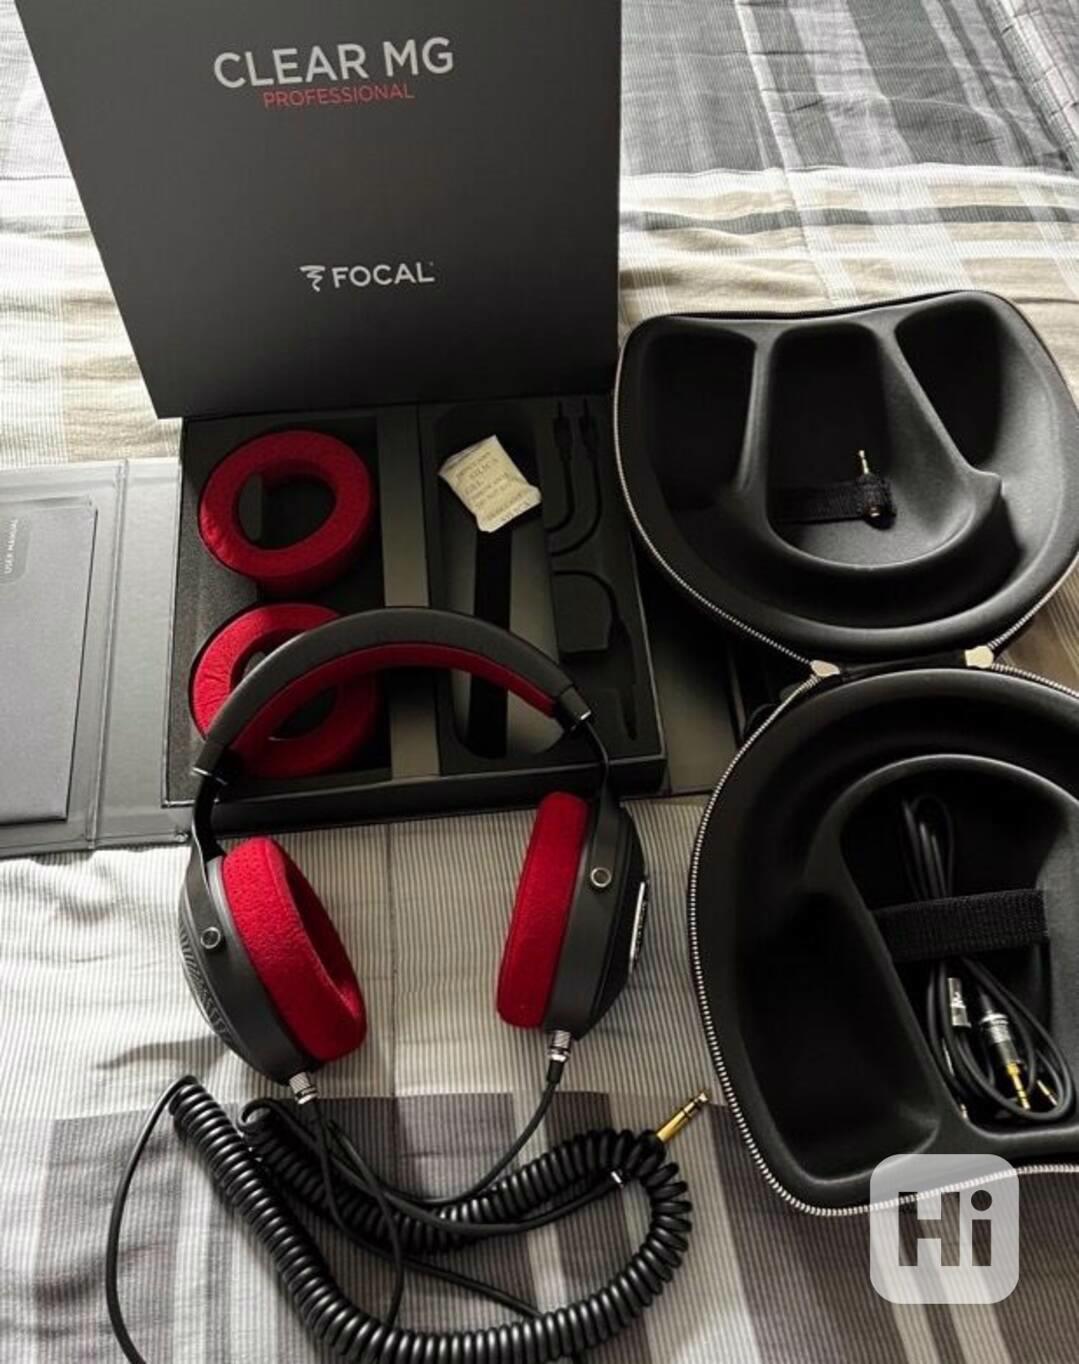 Focal Clear MG Pro Headphones - foto 1